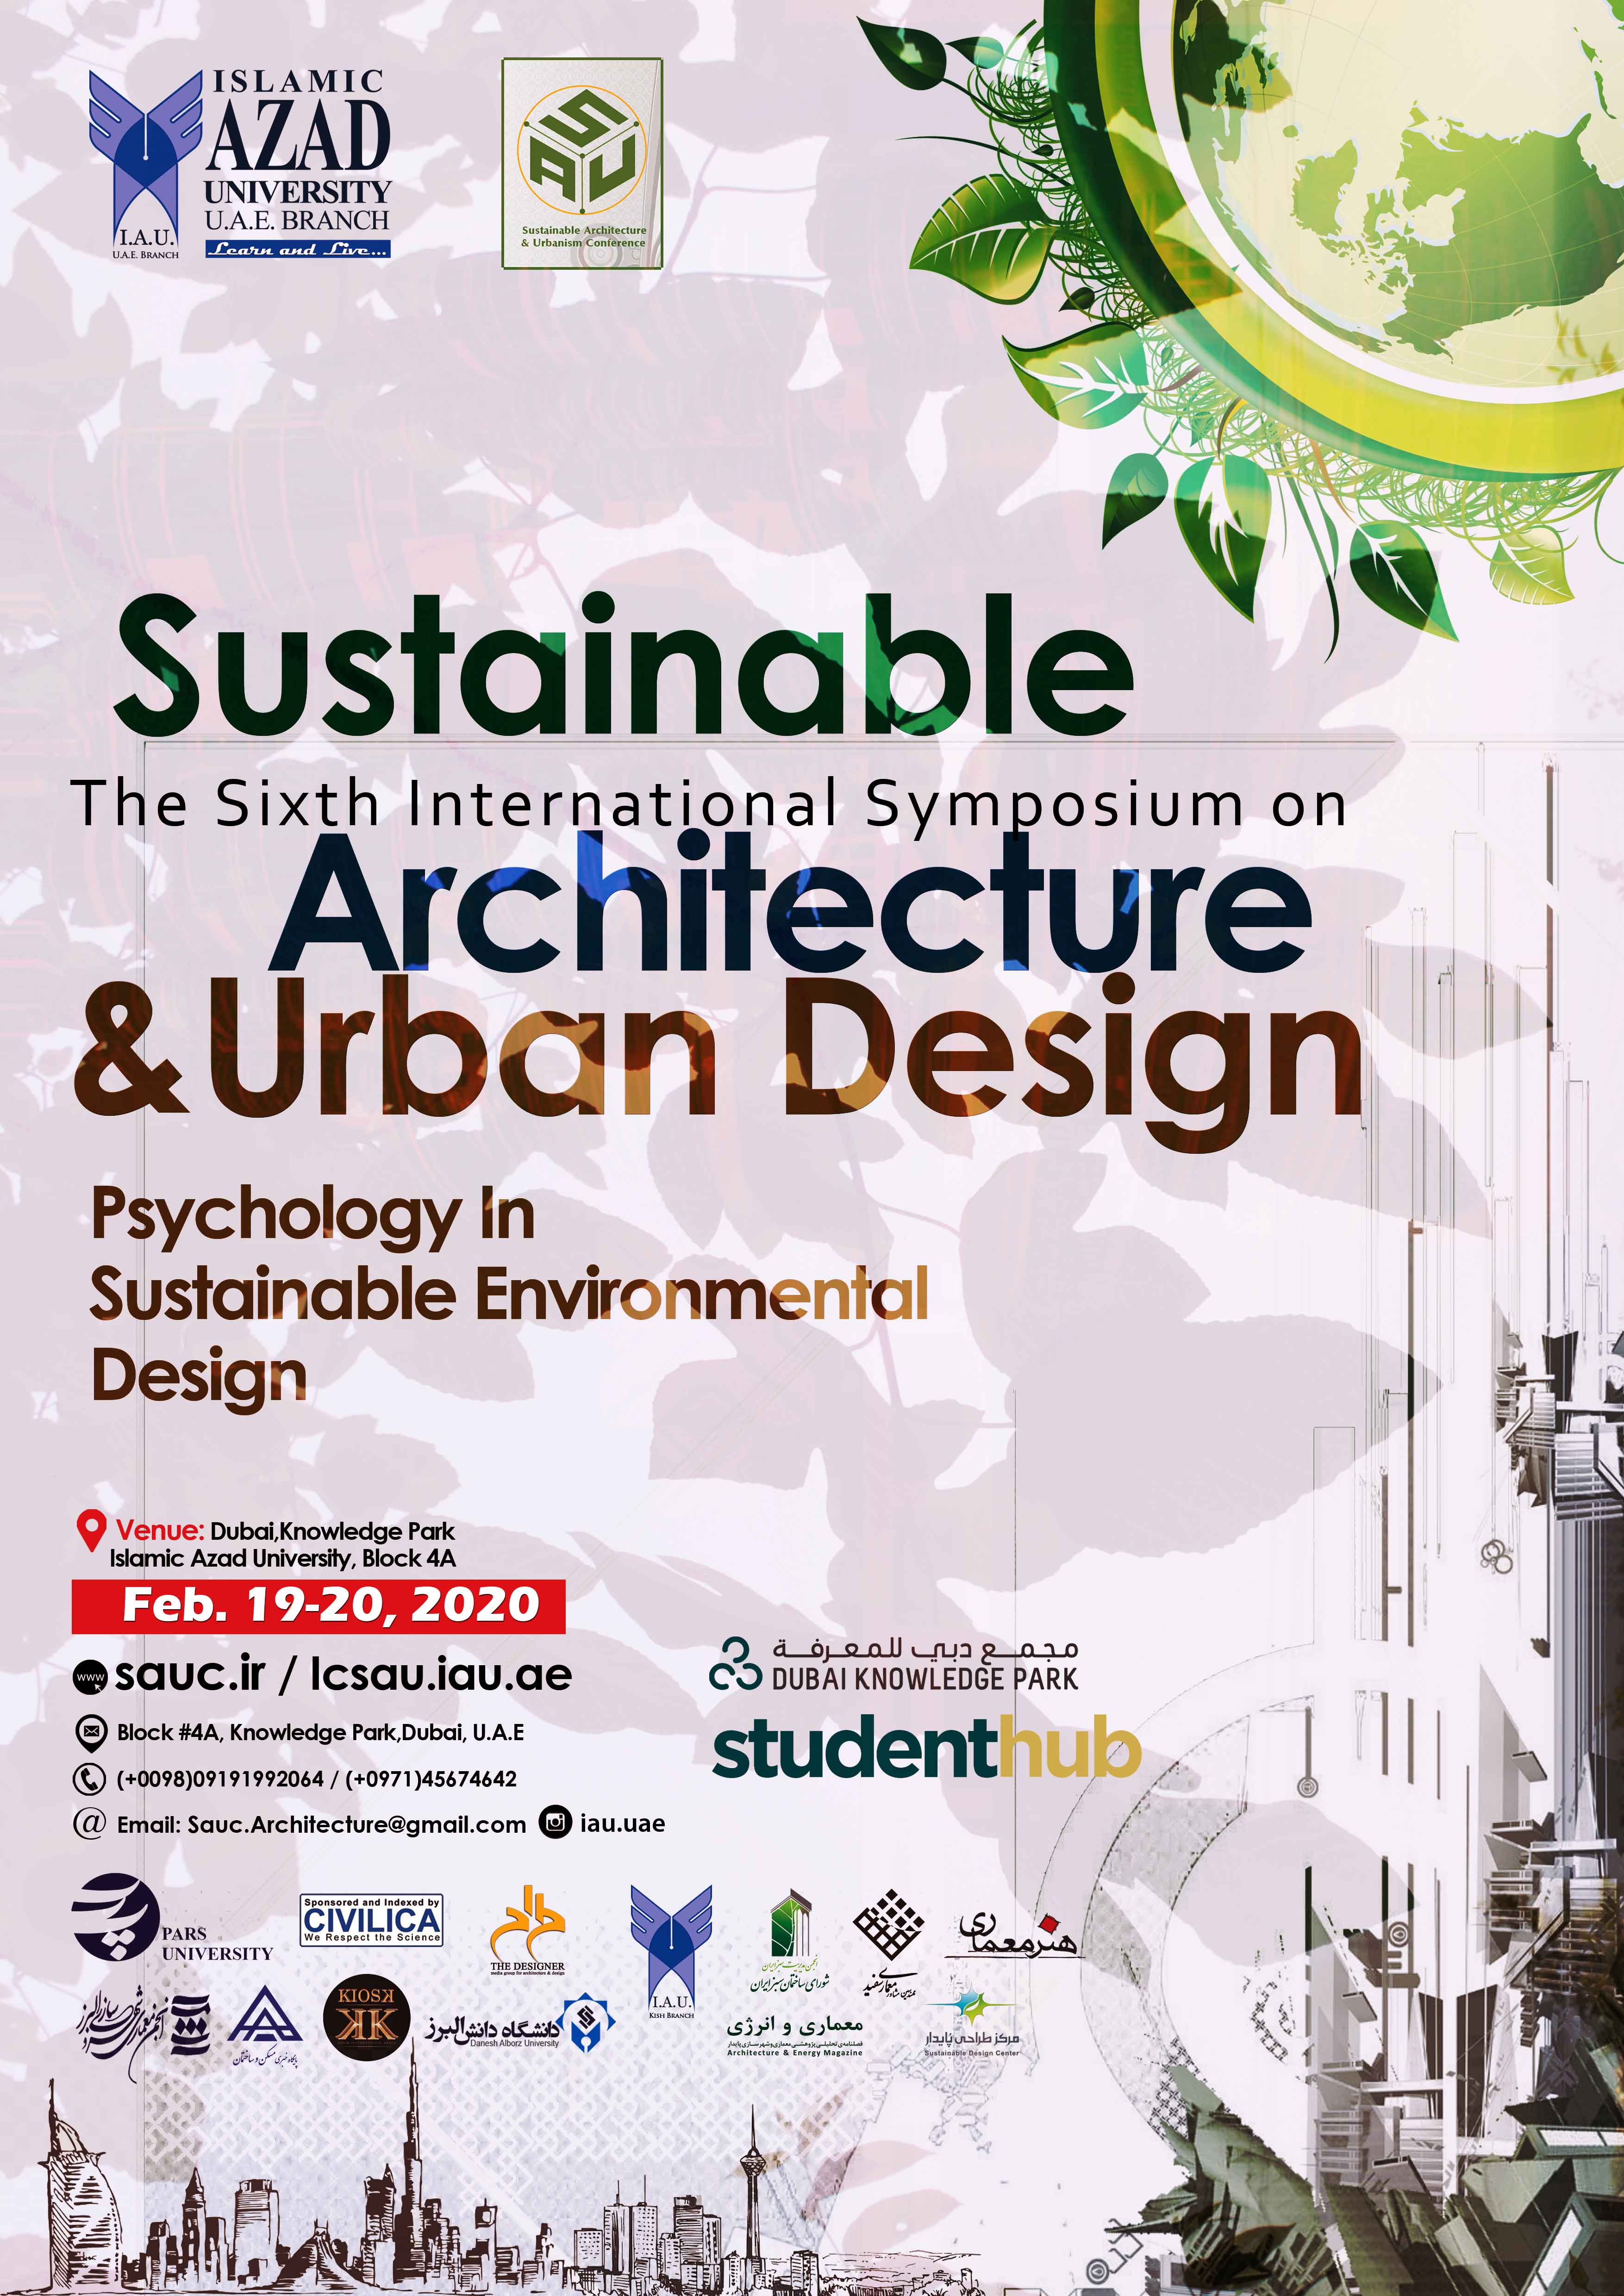 The Sixth International symposium on Sustainable Architecture